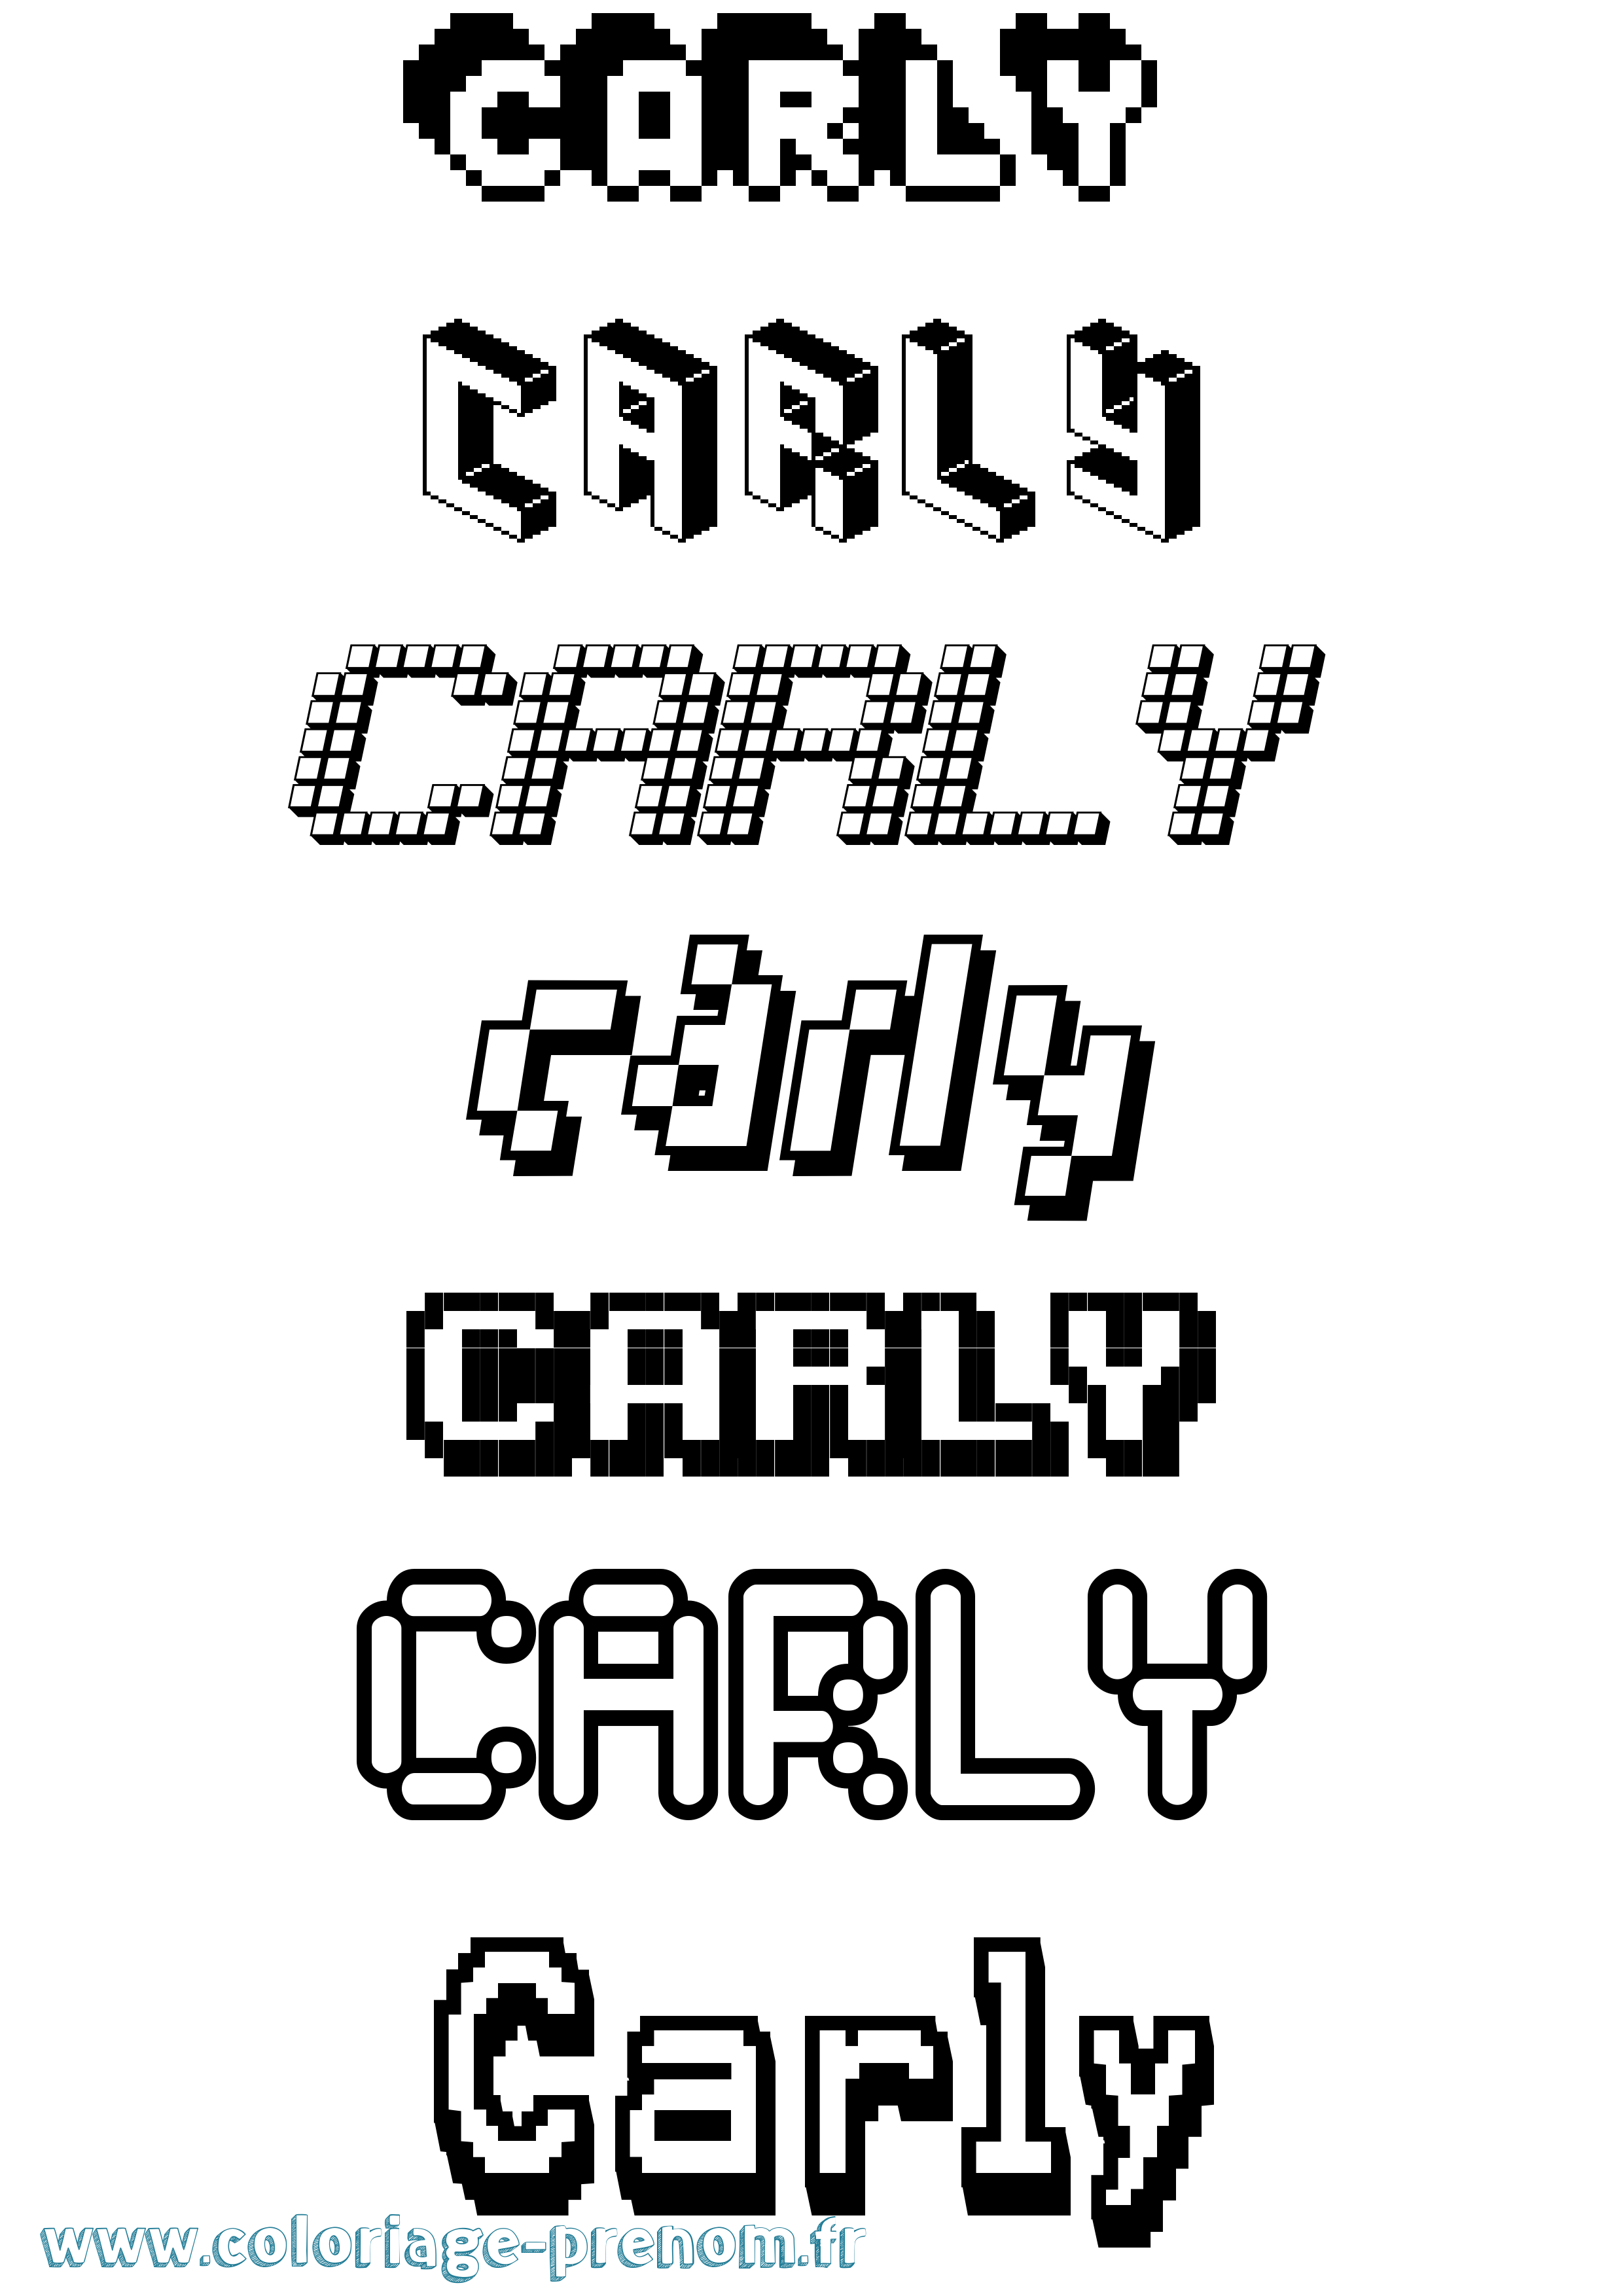 Coloriage prénom Carly Pixel